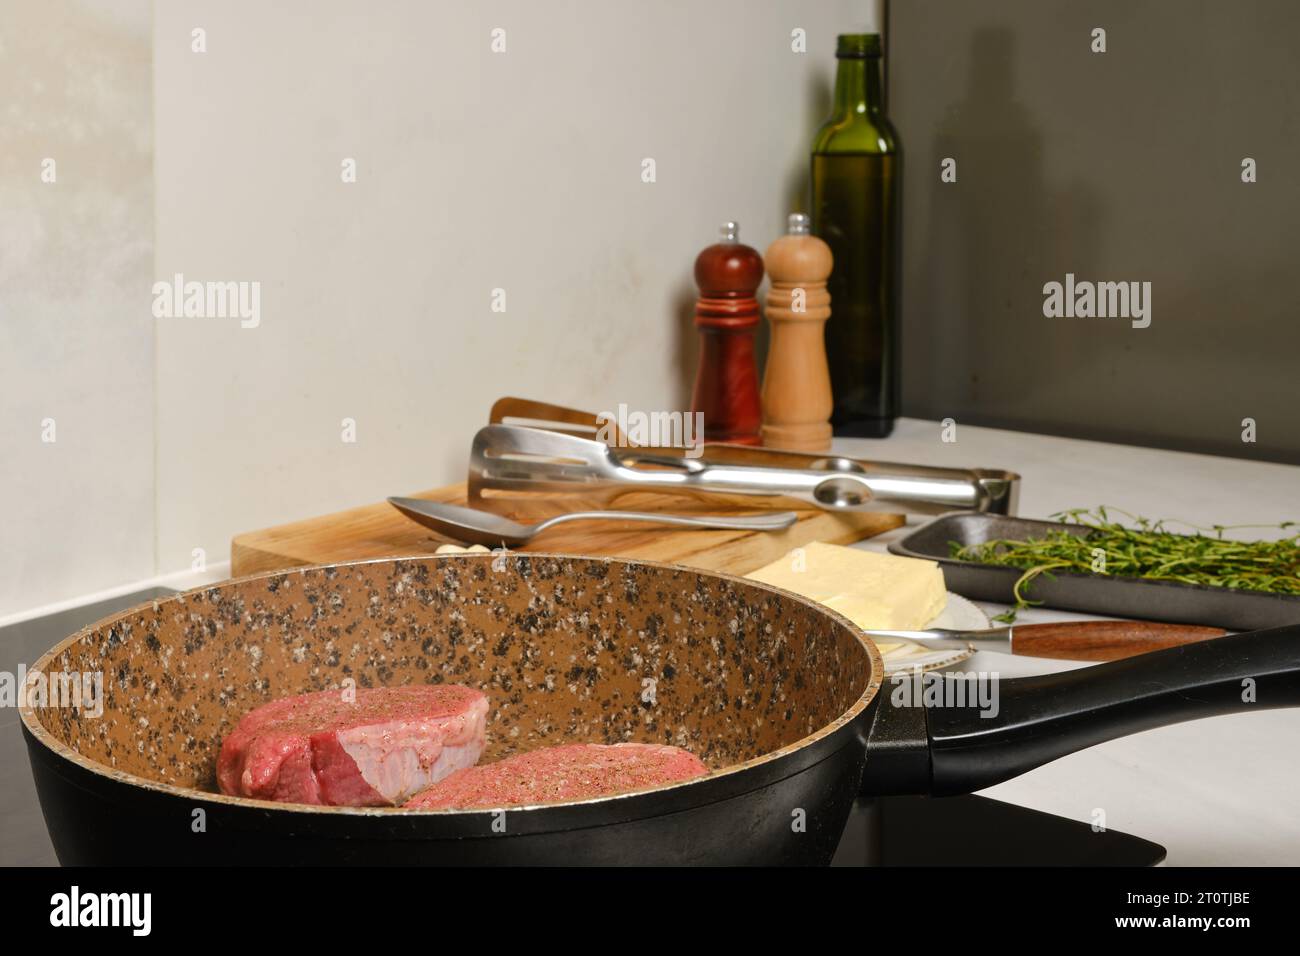 Frying top sirloin beef steak in the kitchen Stock Photo